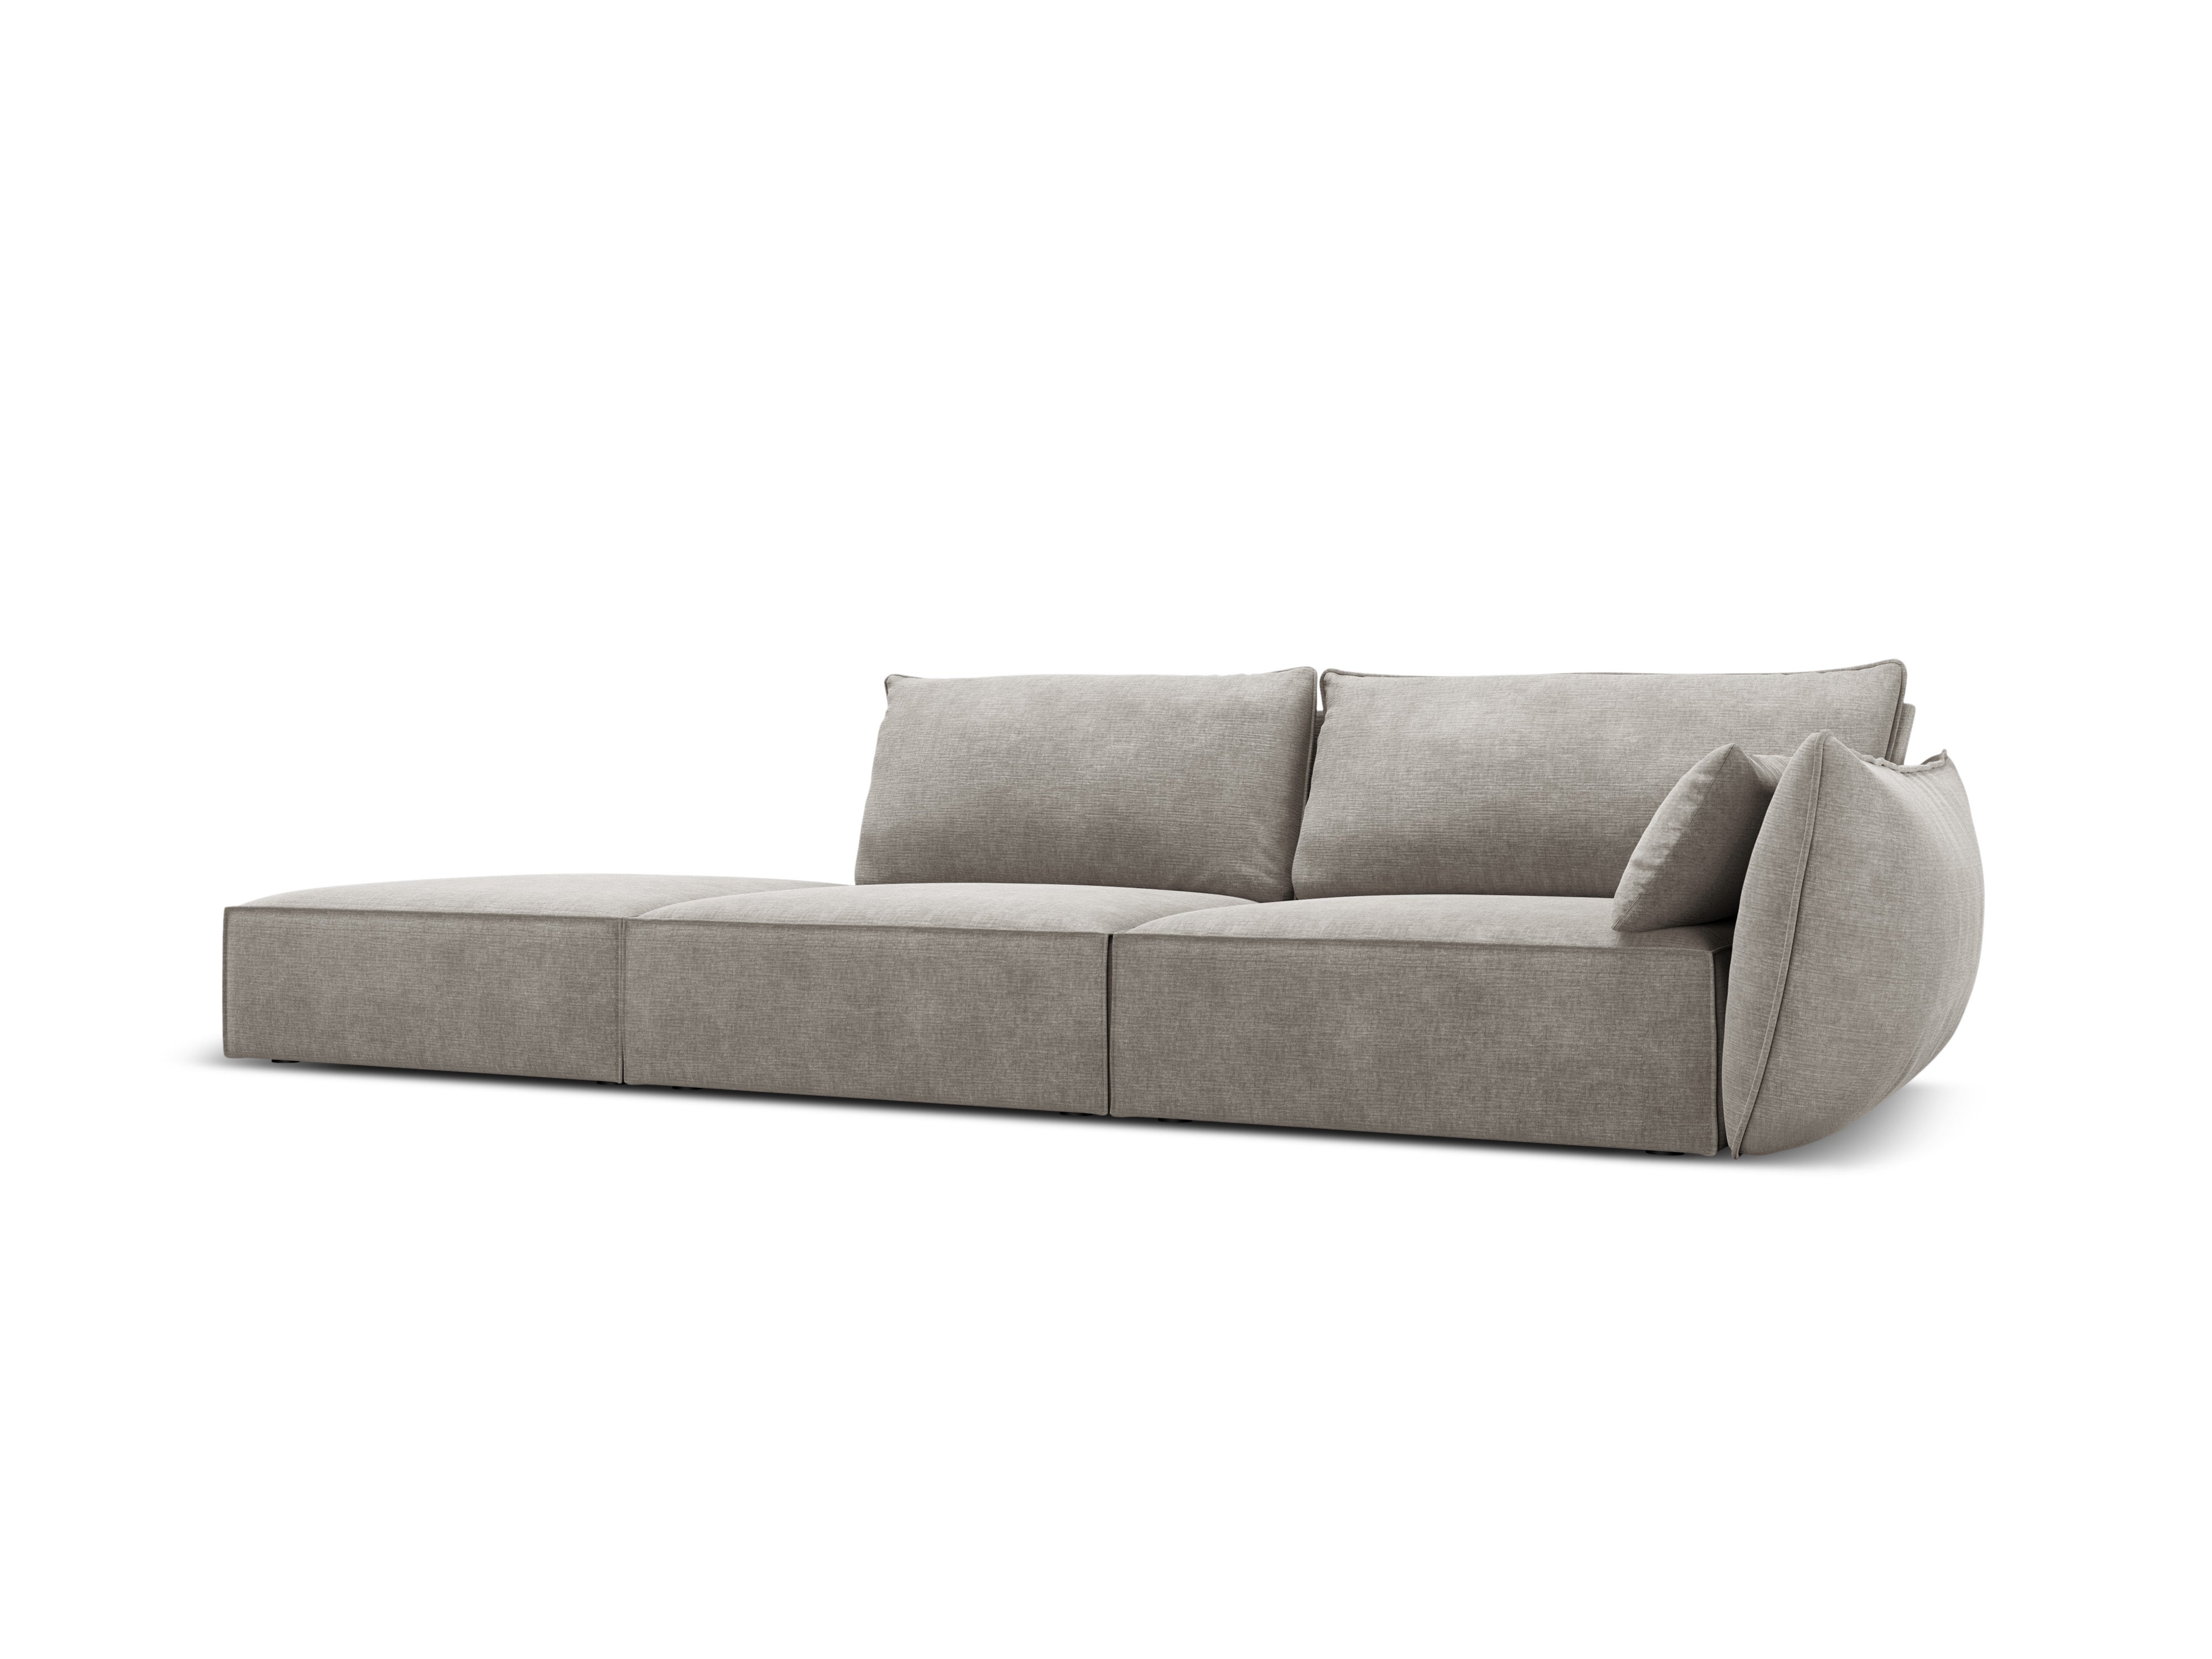 Left Sofa, "Vanda", 4 Seats, 286x100x85
Made in Europe, Mazzini Sofas, Eye on Design